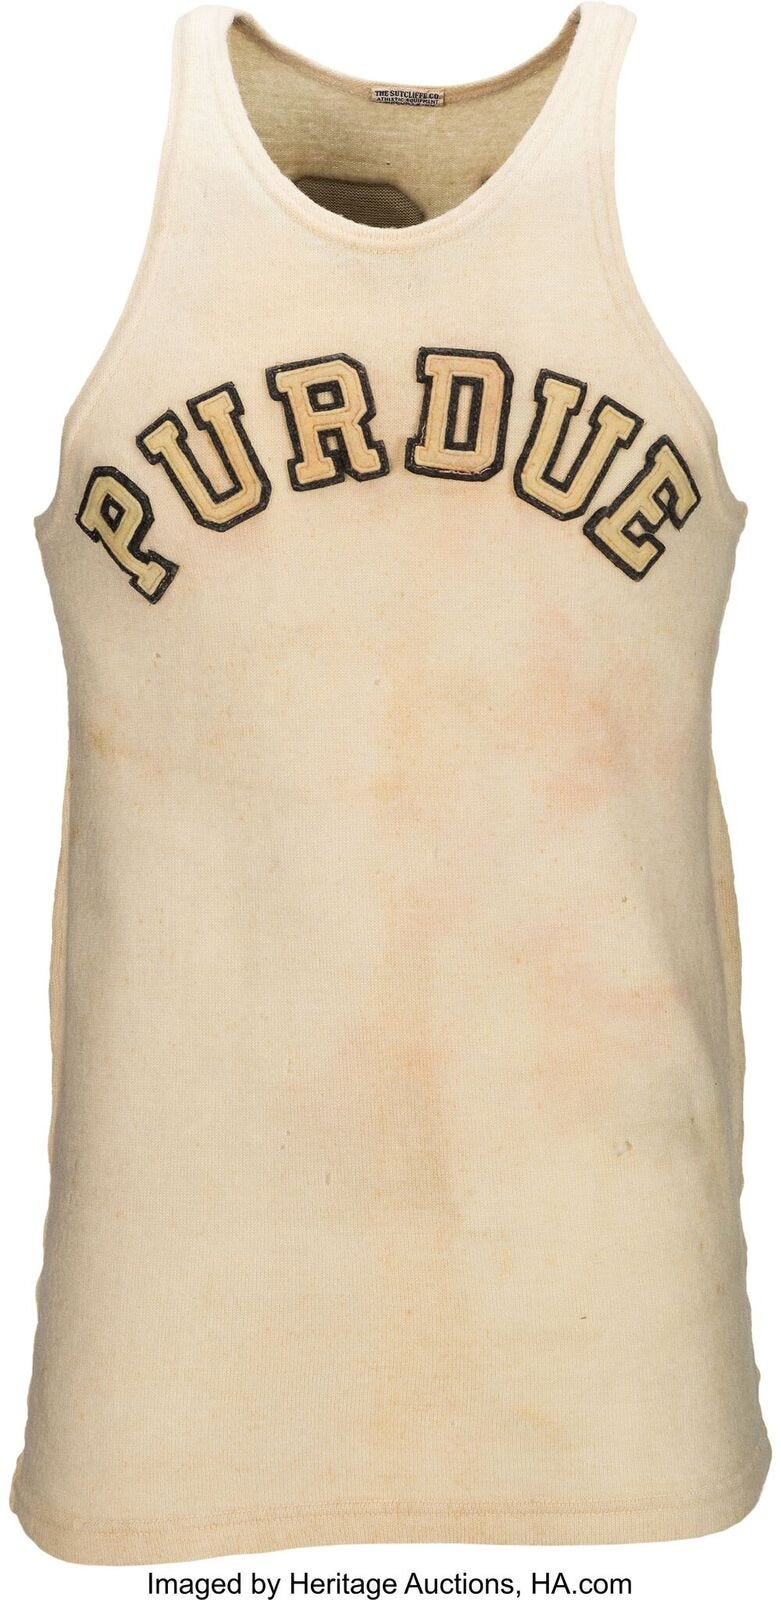 John Wooden Purdue jersey